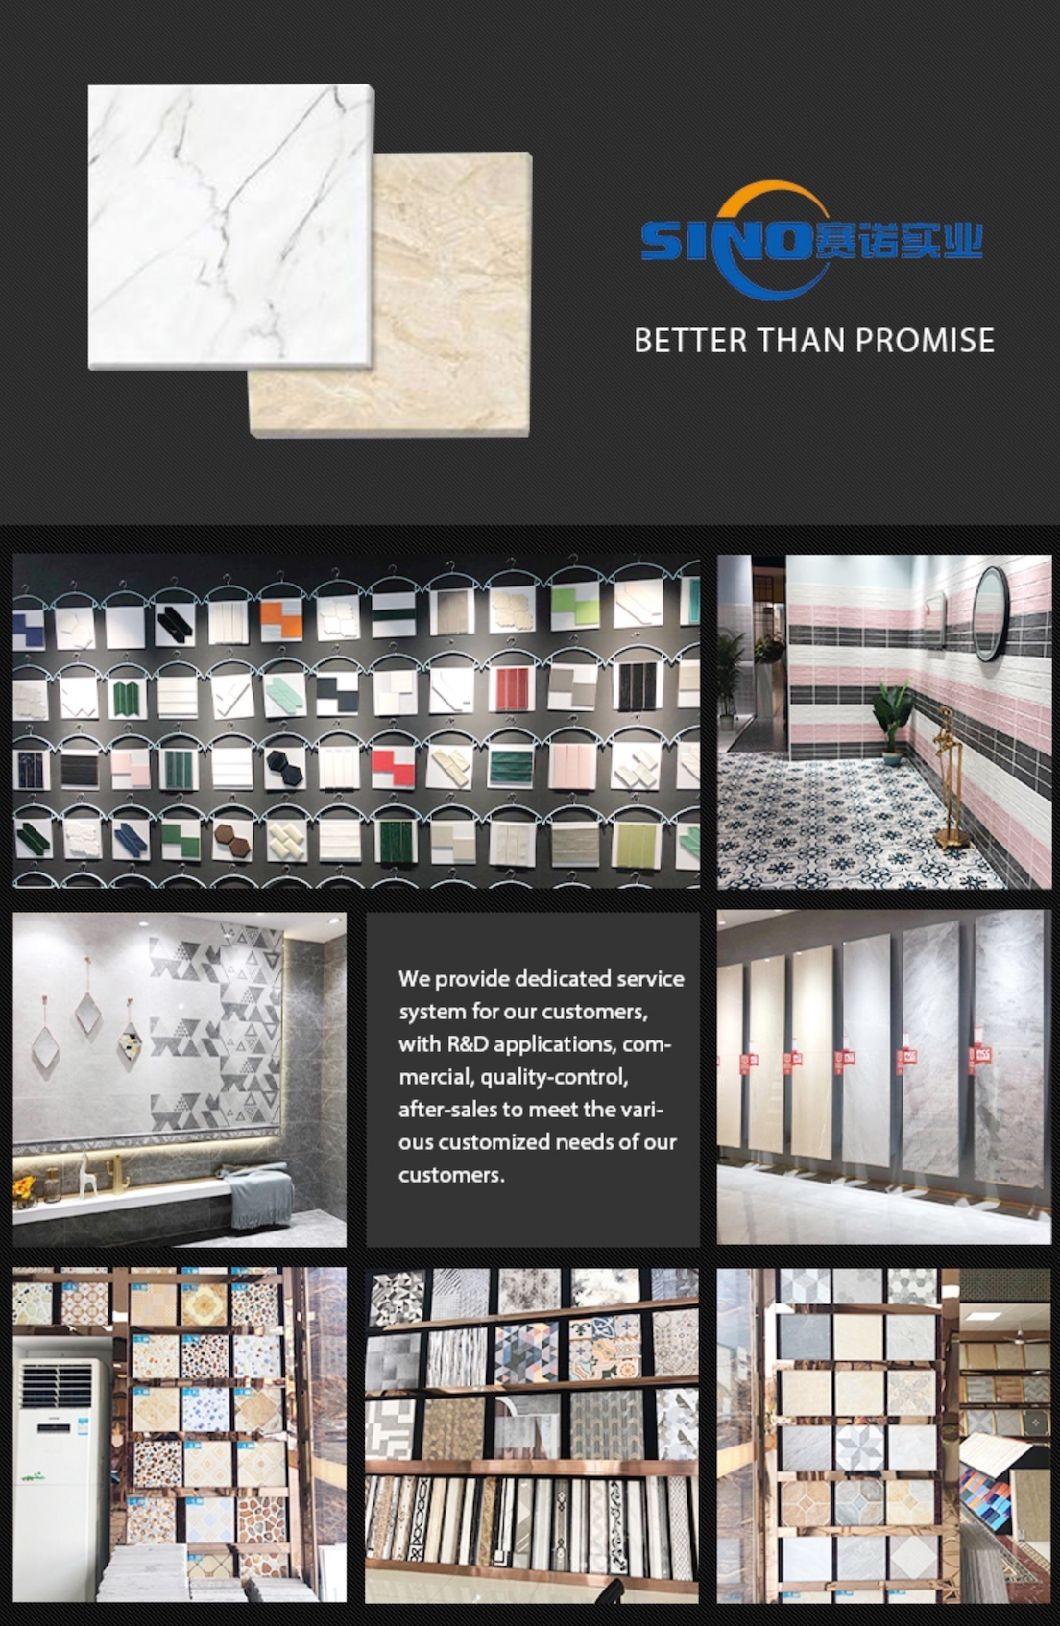 2021 Hot Sale New Design PVC Wall Hung Bathroom Cabinet for Bathroom Vanity